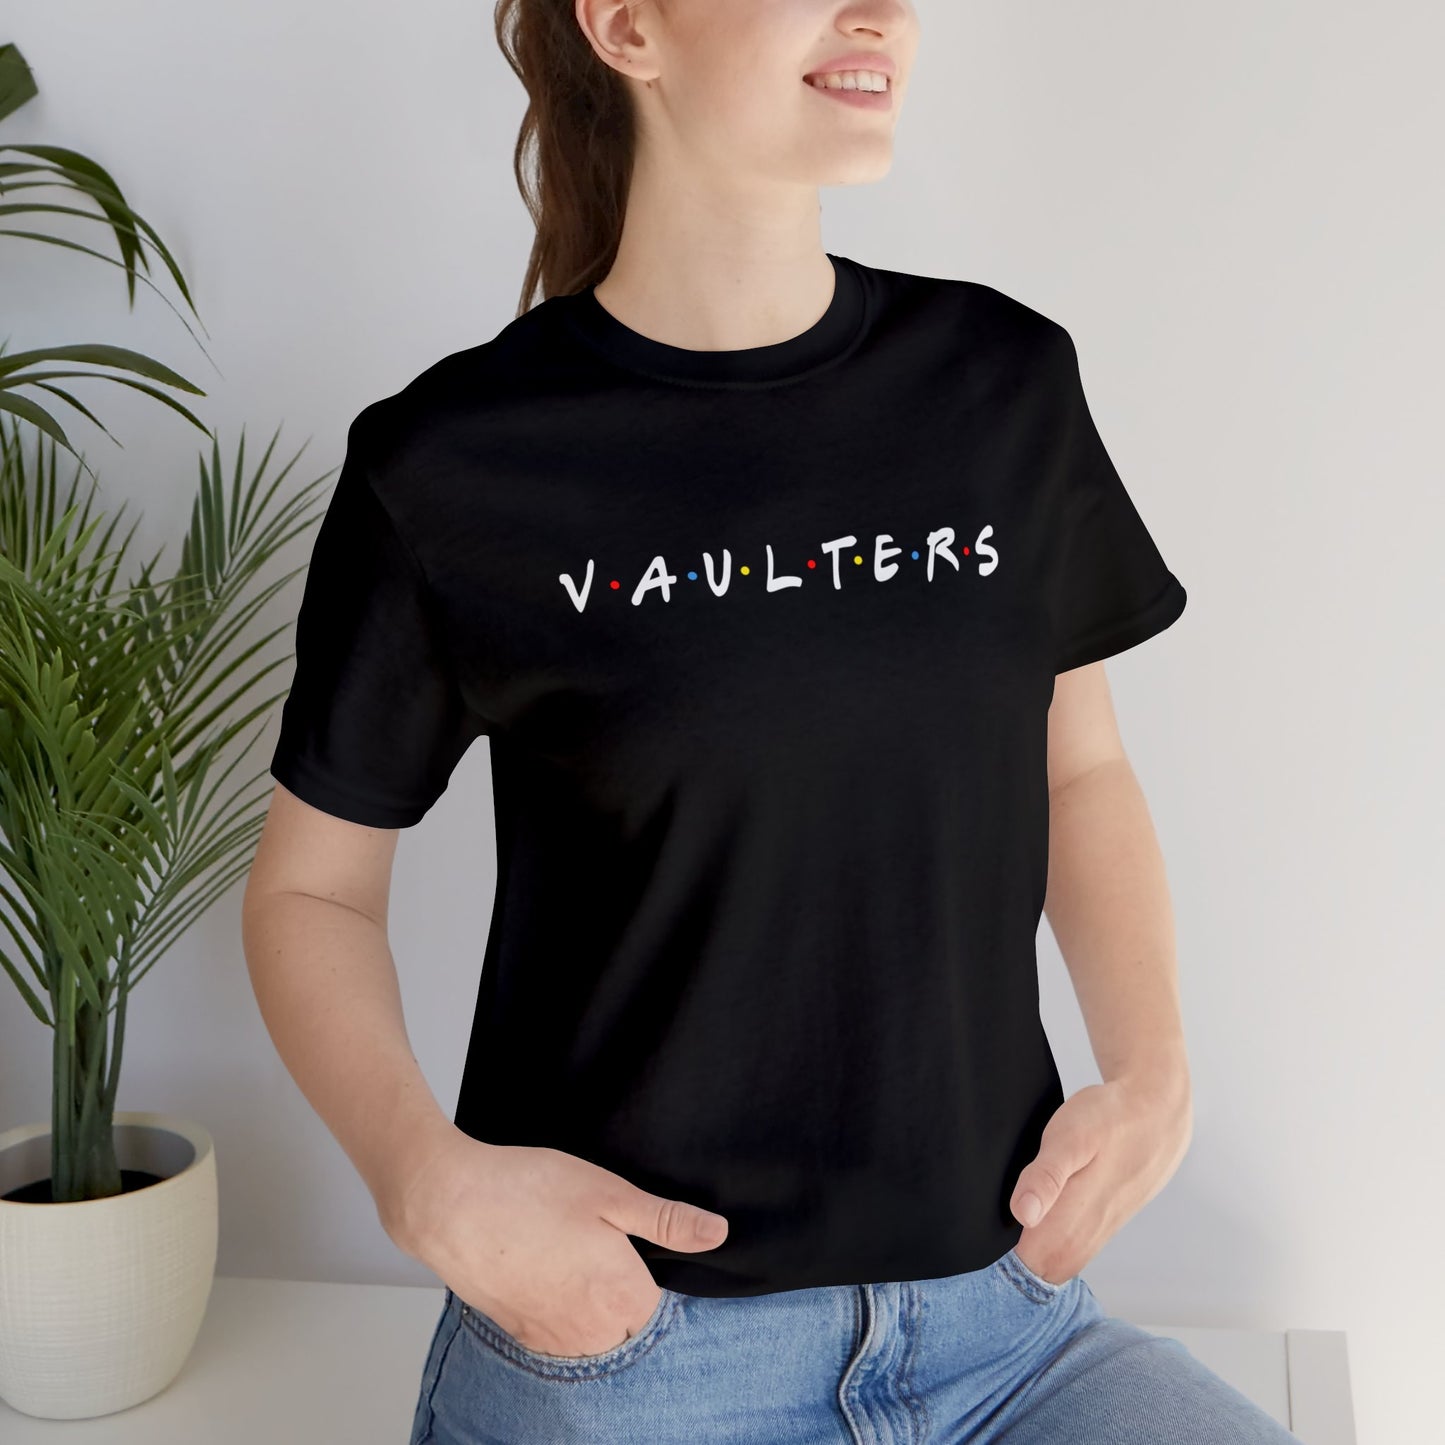 Vaulters - Classic Tee